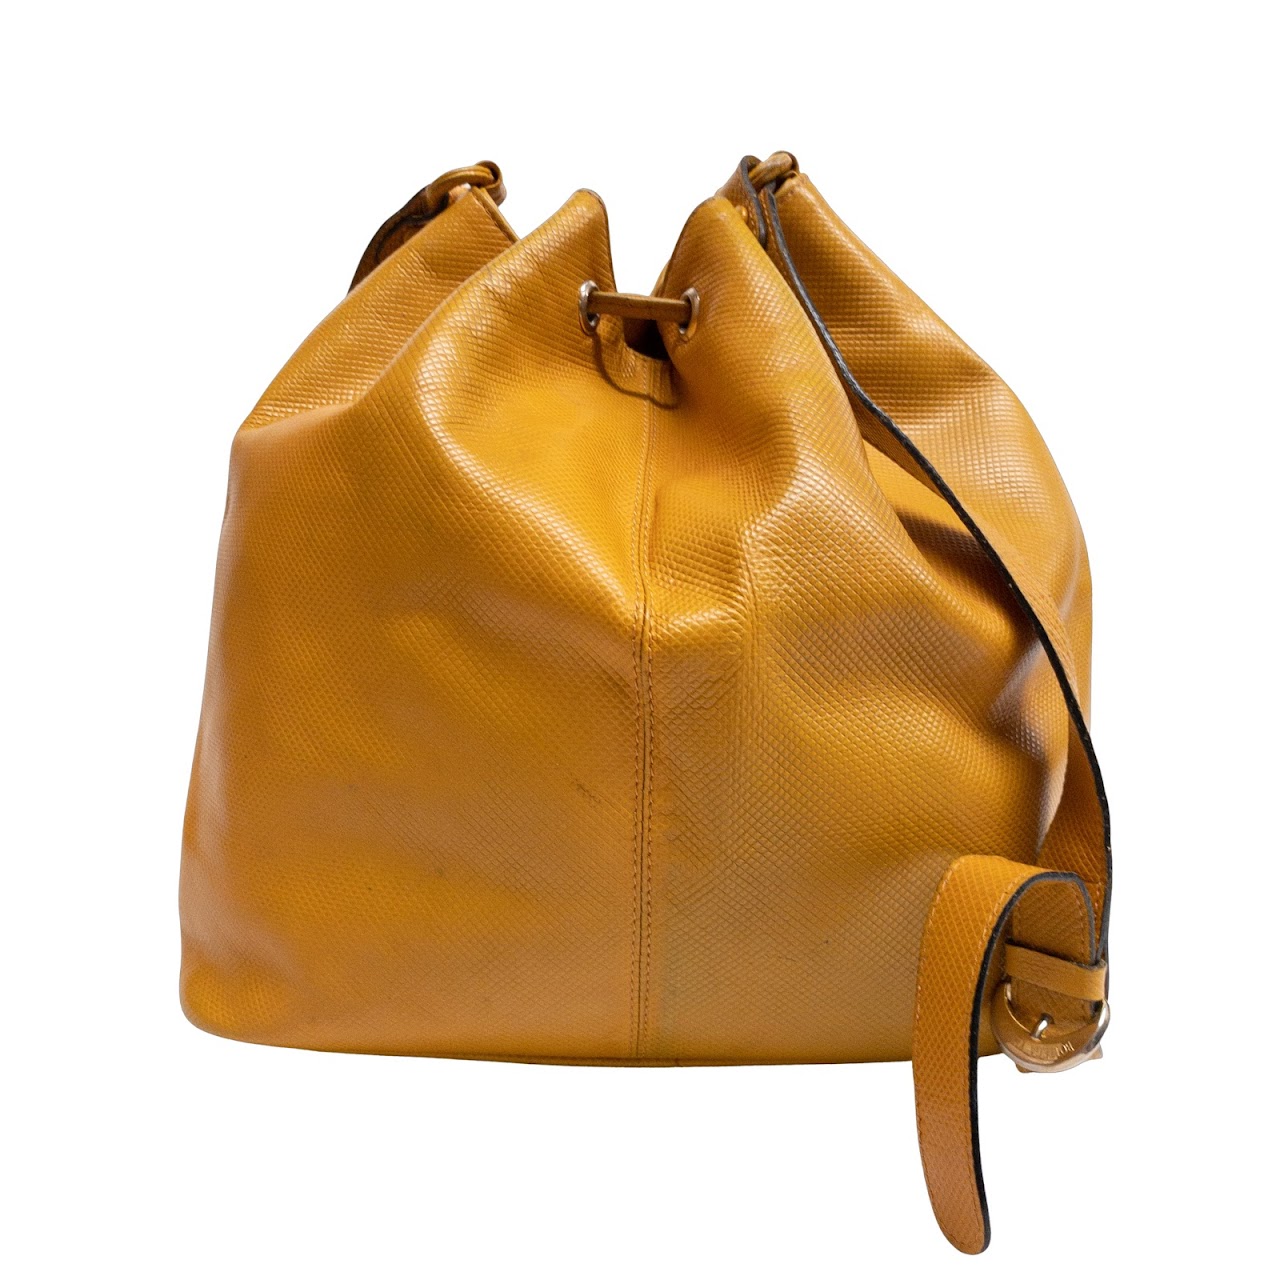 Sold at Auction: Vintage Bottega Veneta Tote Bag